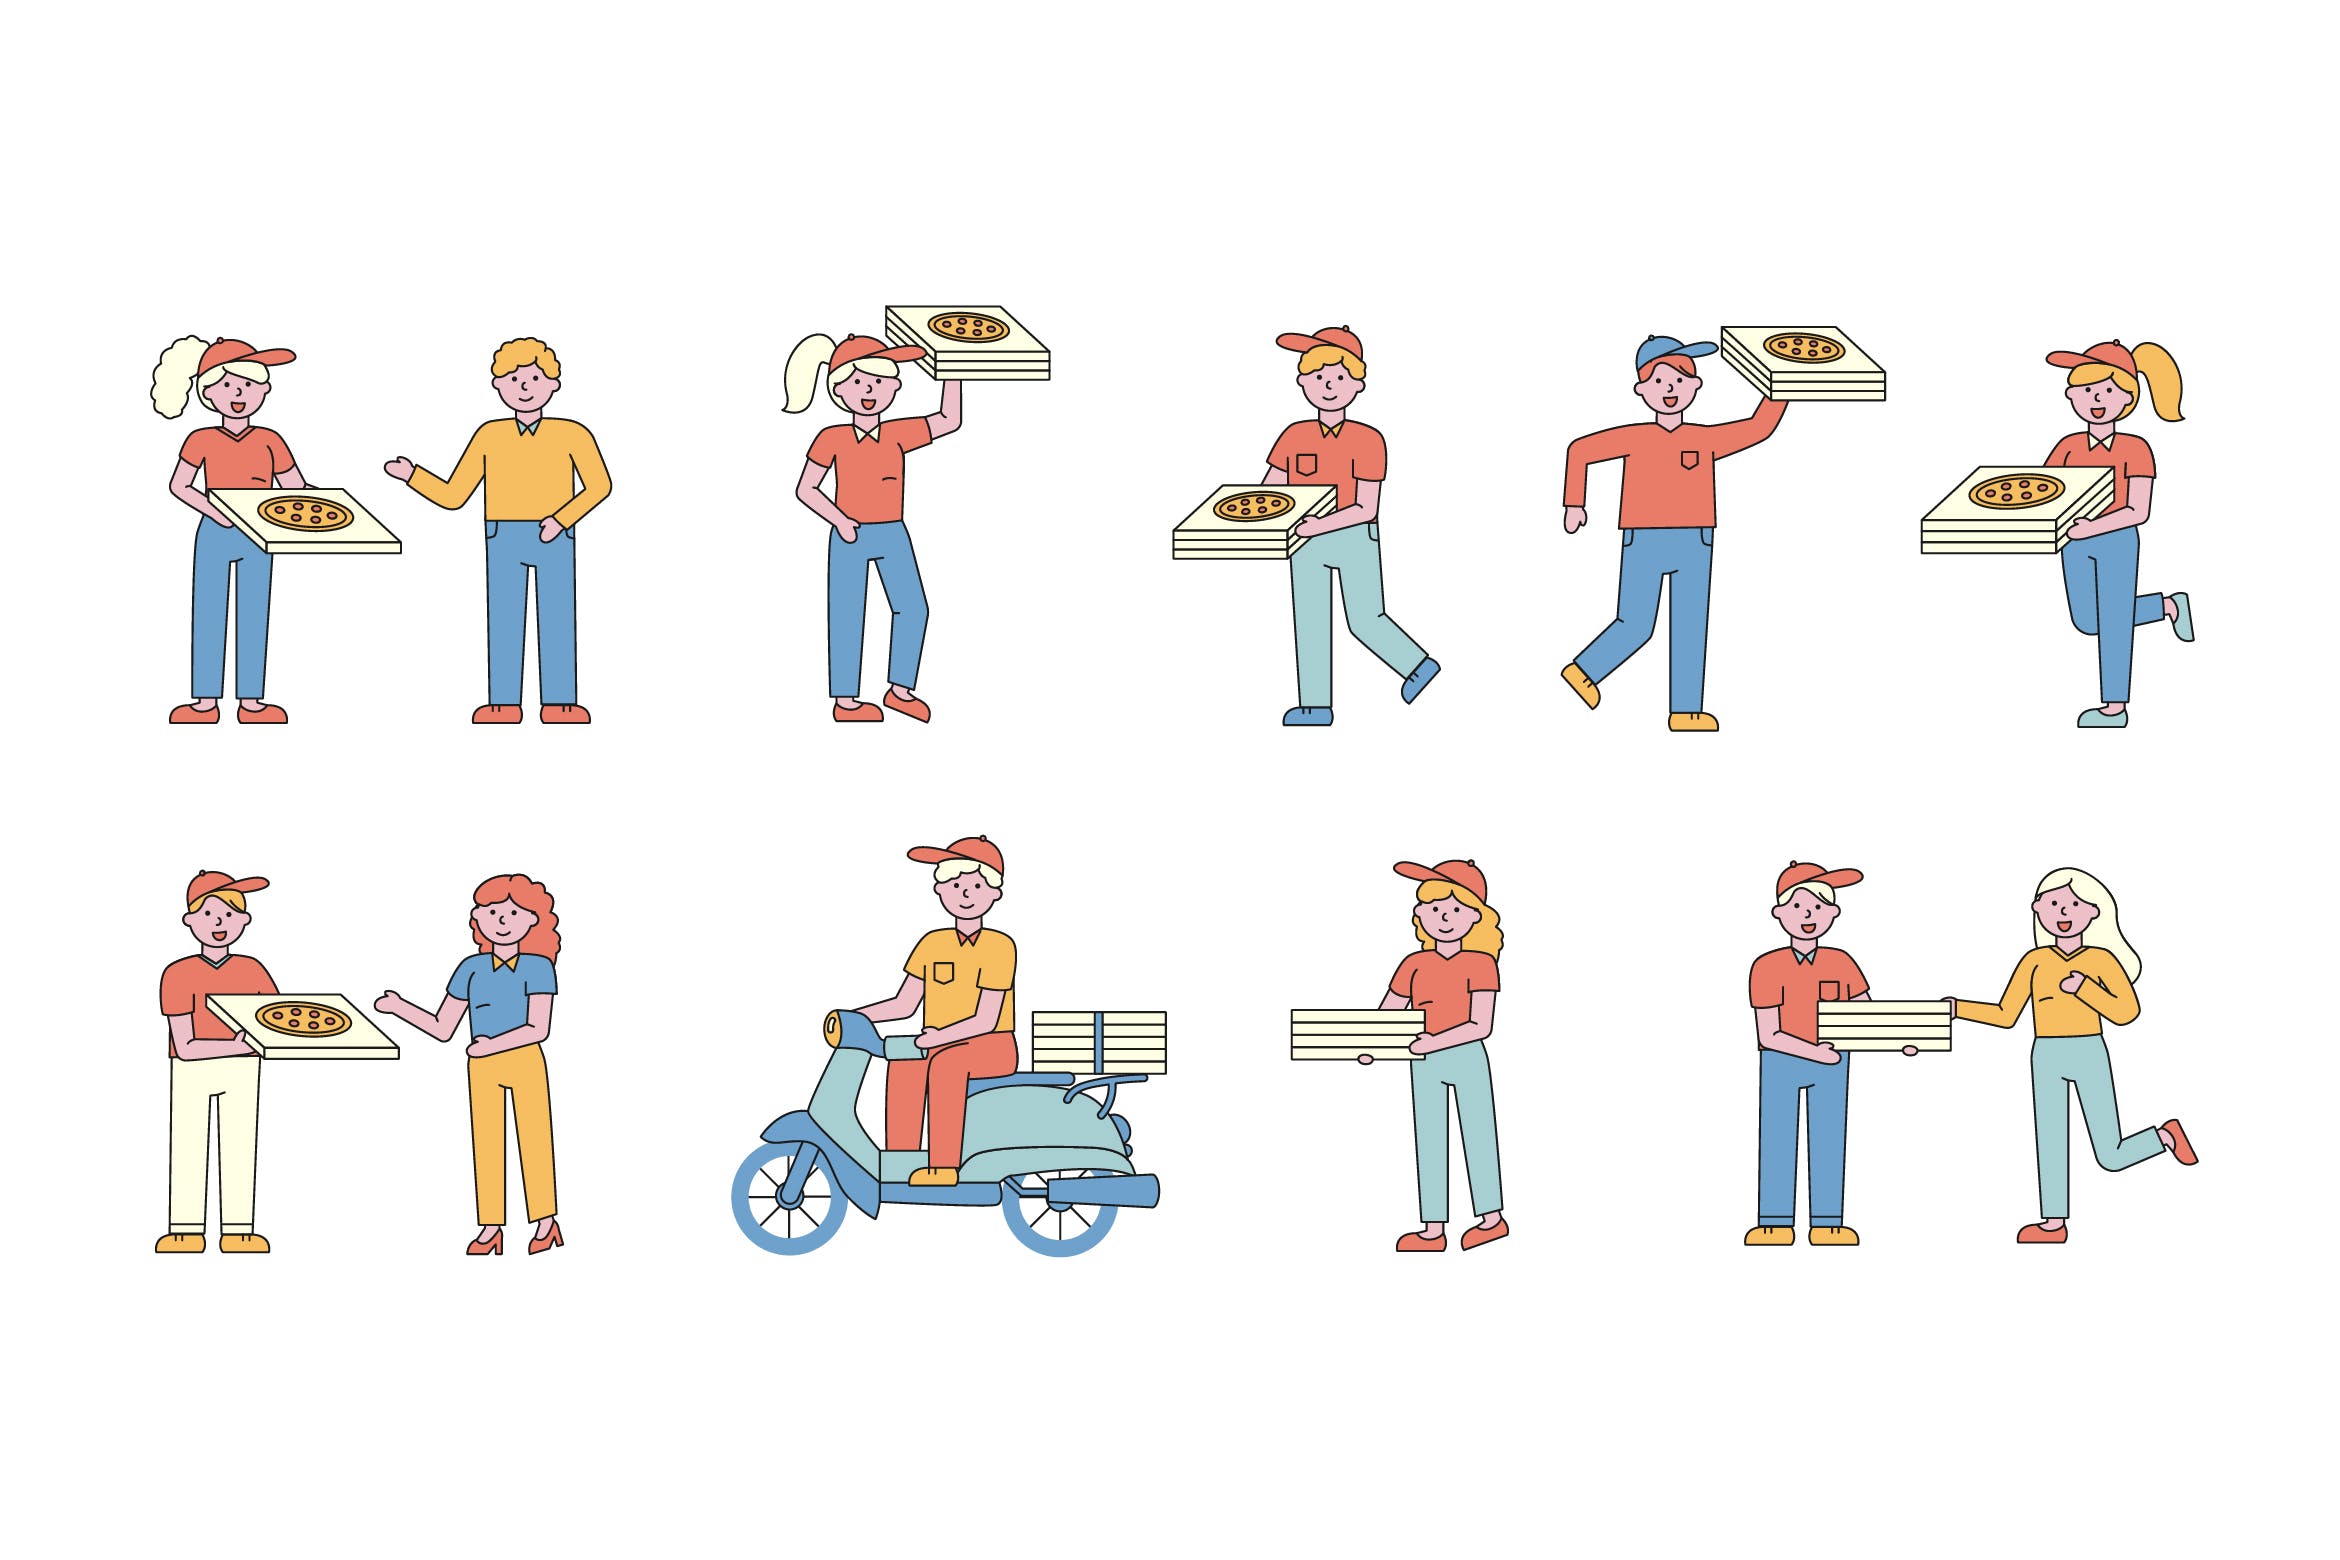 披萨送餐员人物形象线条艺术矢量插画16图库精选素材 Pizza delivery Lineart People Character Collection插图